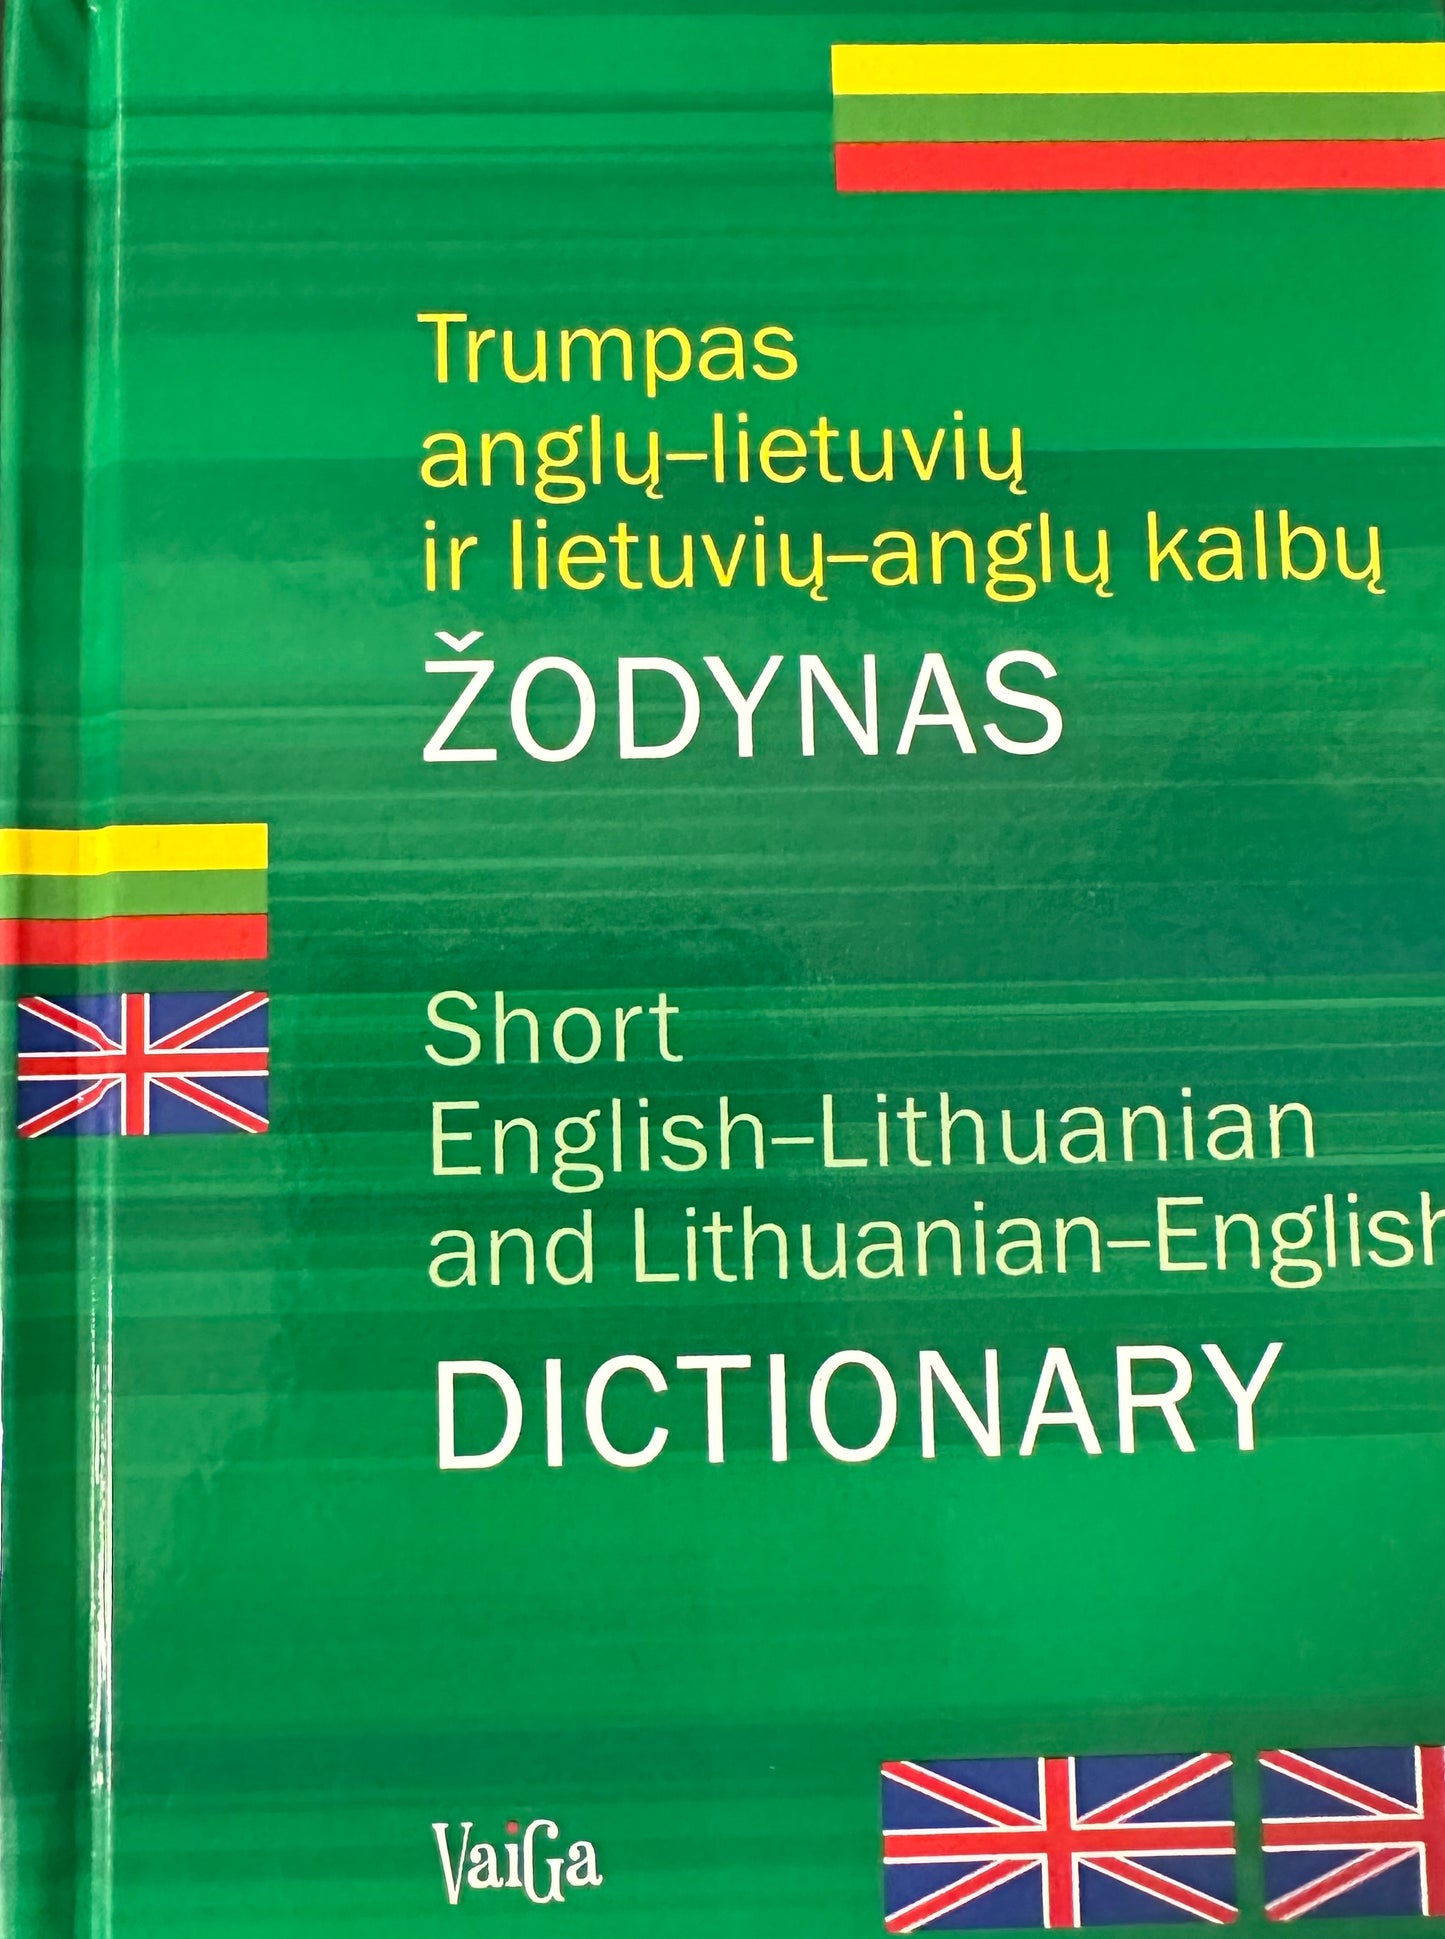 A Compact English-Lithuanian and Lithuanian-English Dictionary